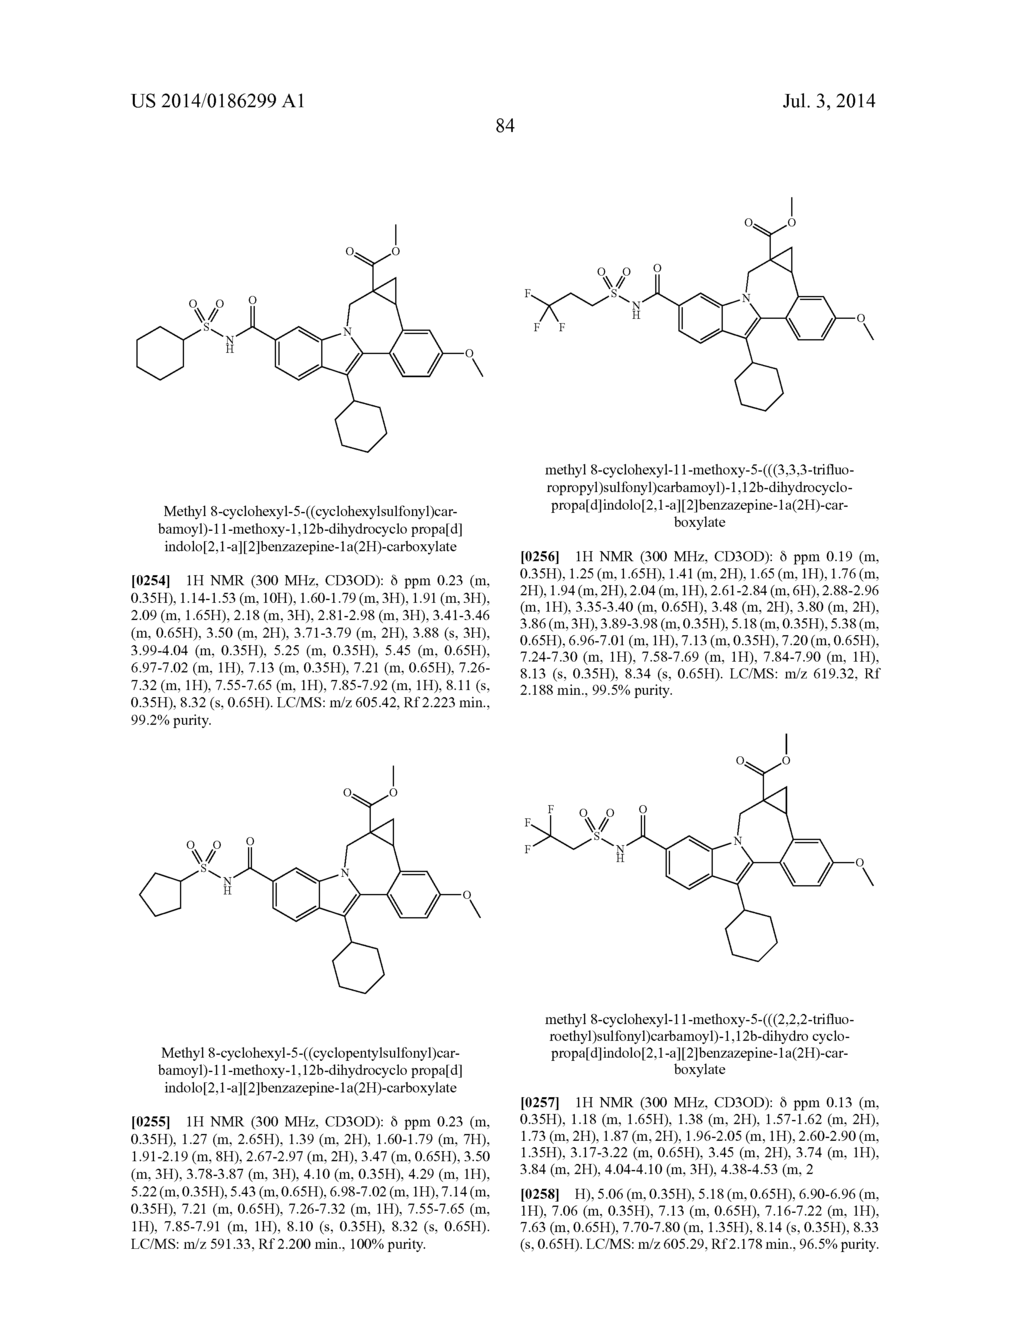 Cyclopropyl Fused Indolobenzazepine HCV NS5B Inhibitors - diagram, schematic, and image 85